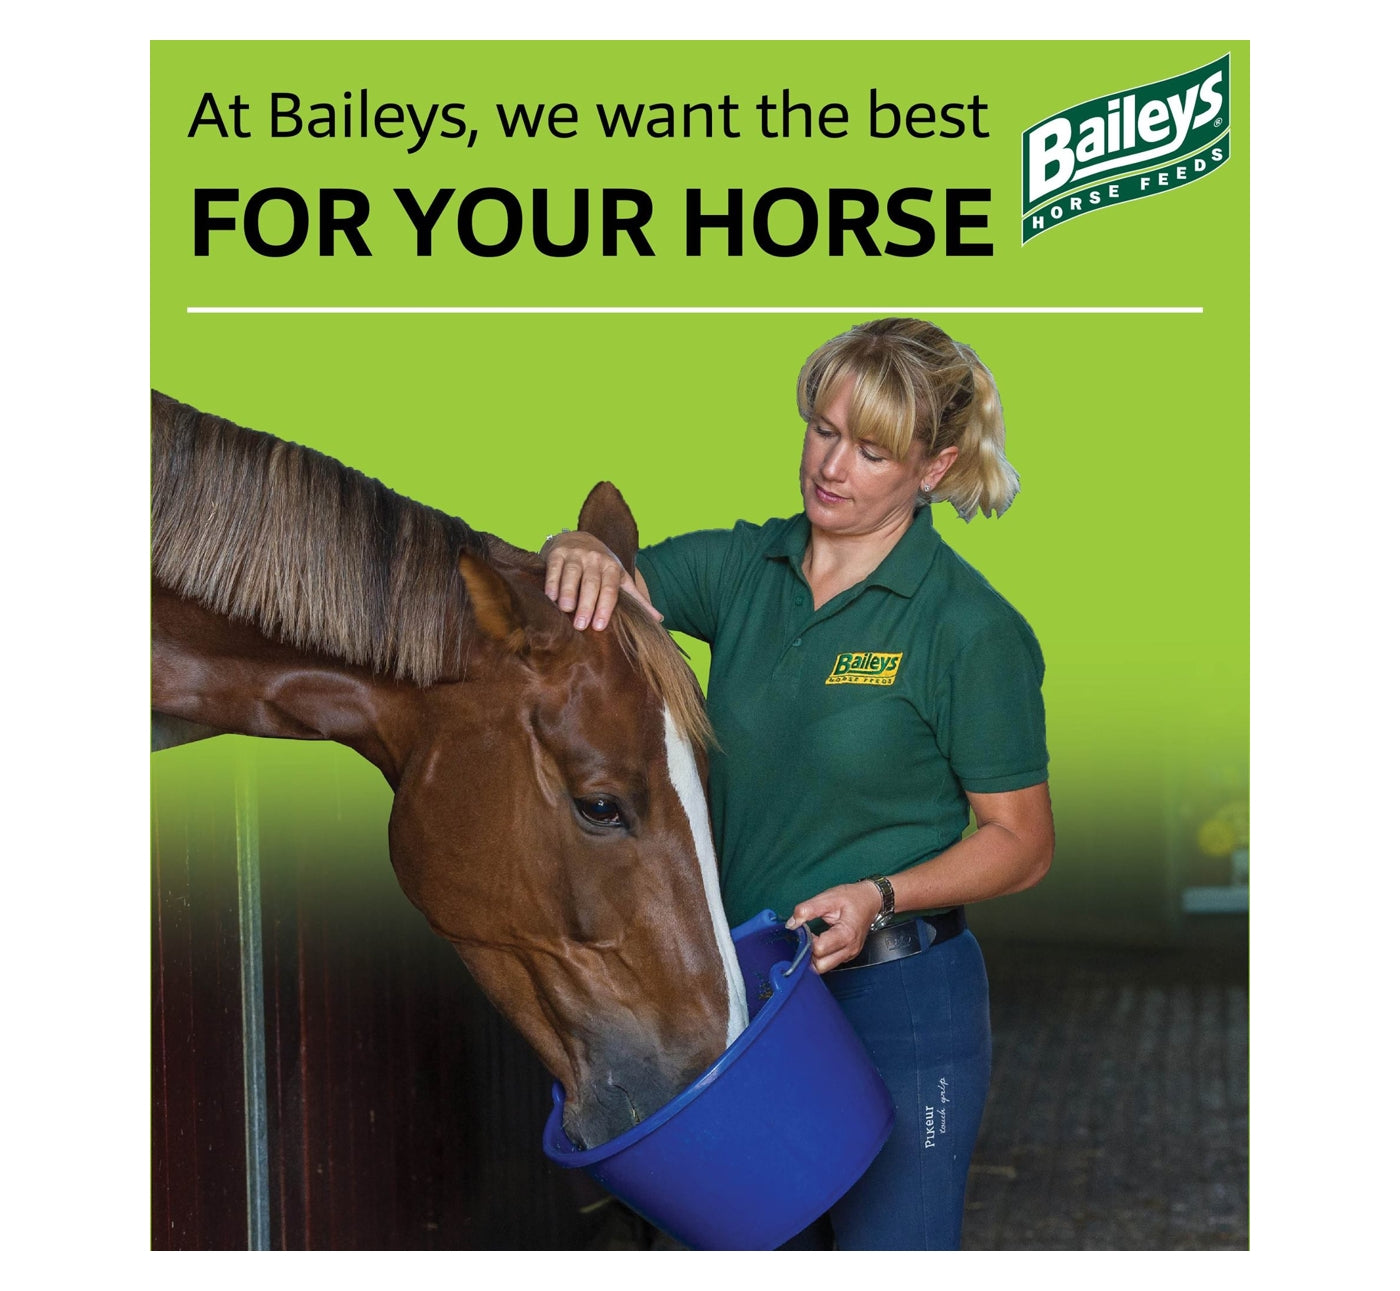 Baileys Light Chaff | Horse Feed - Buy Online SPR Centre UK